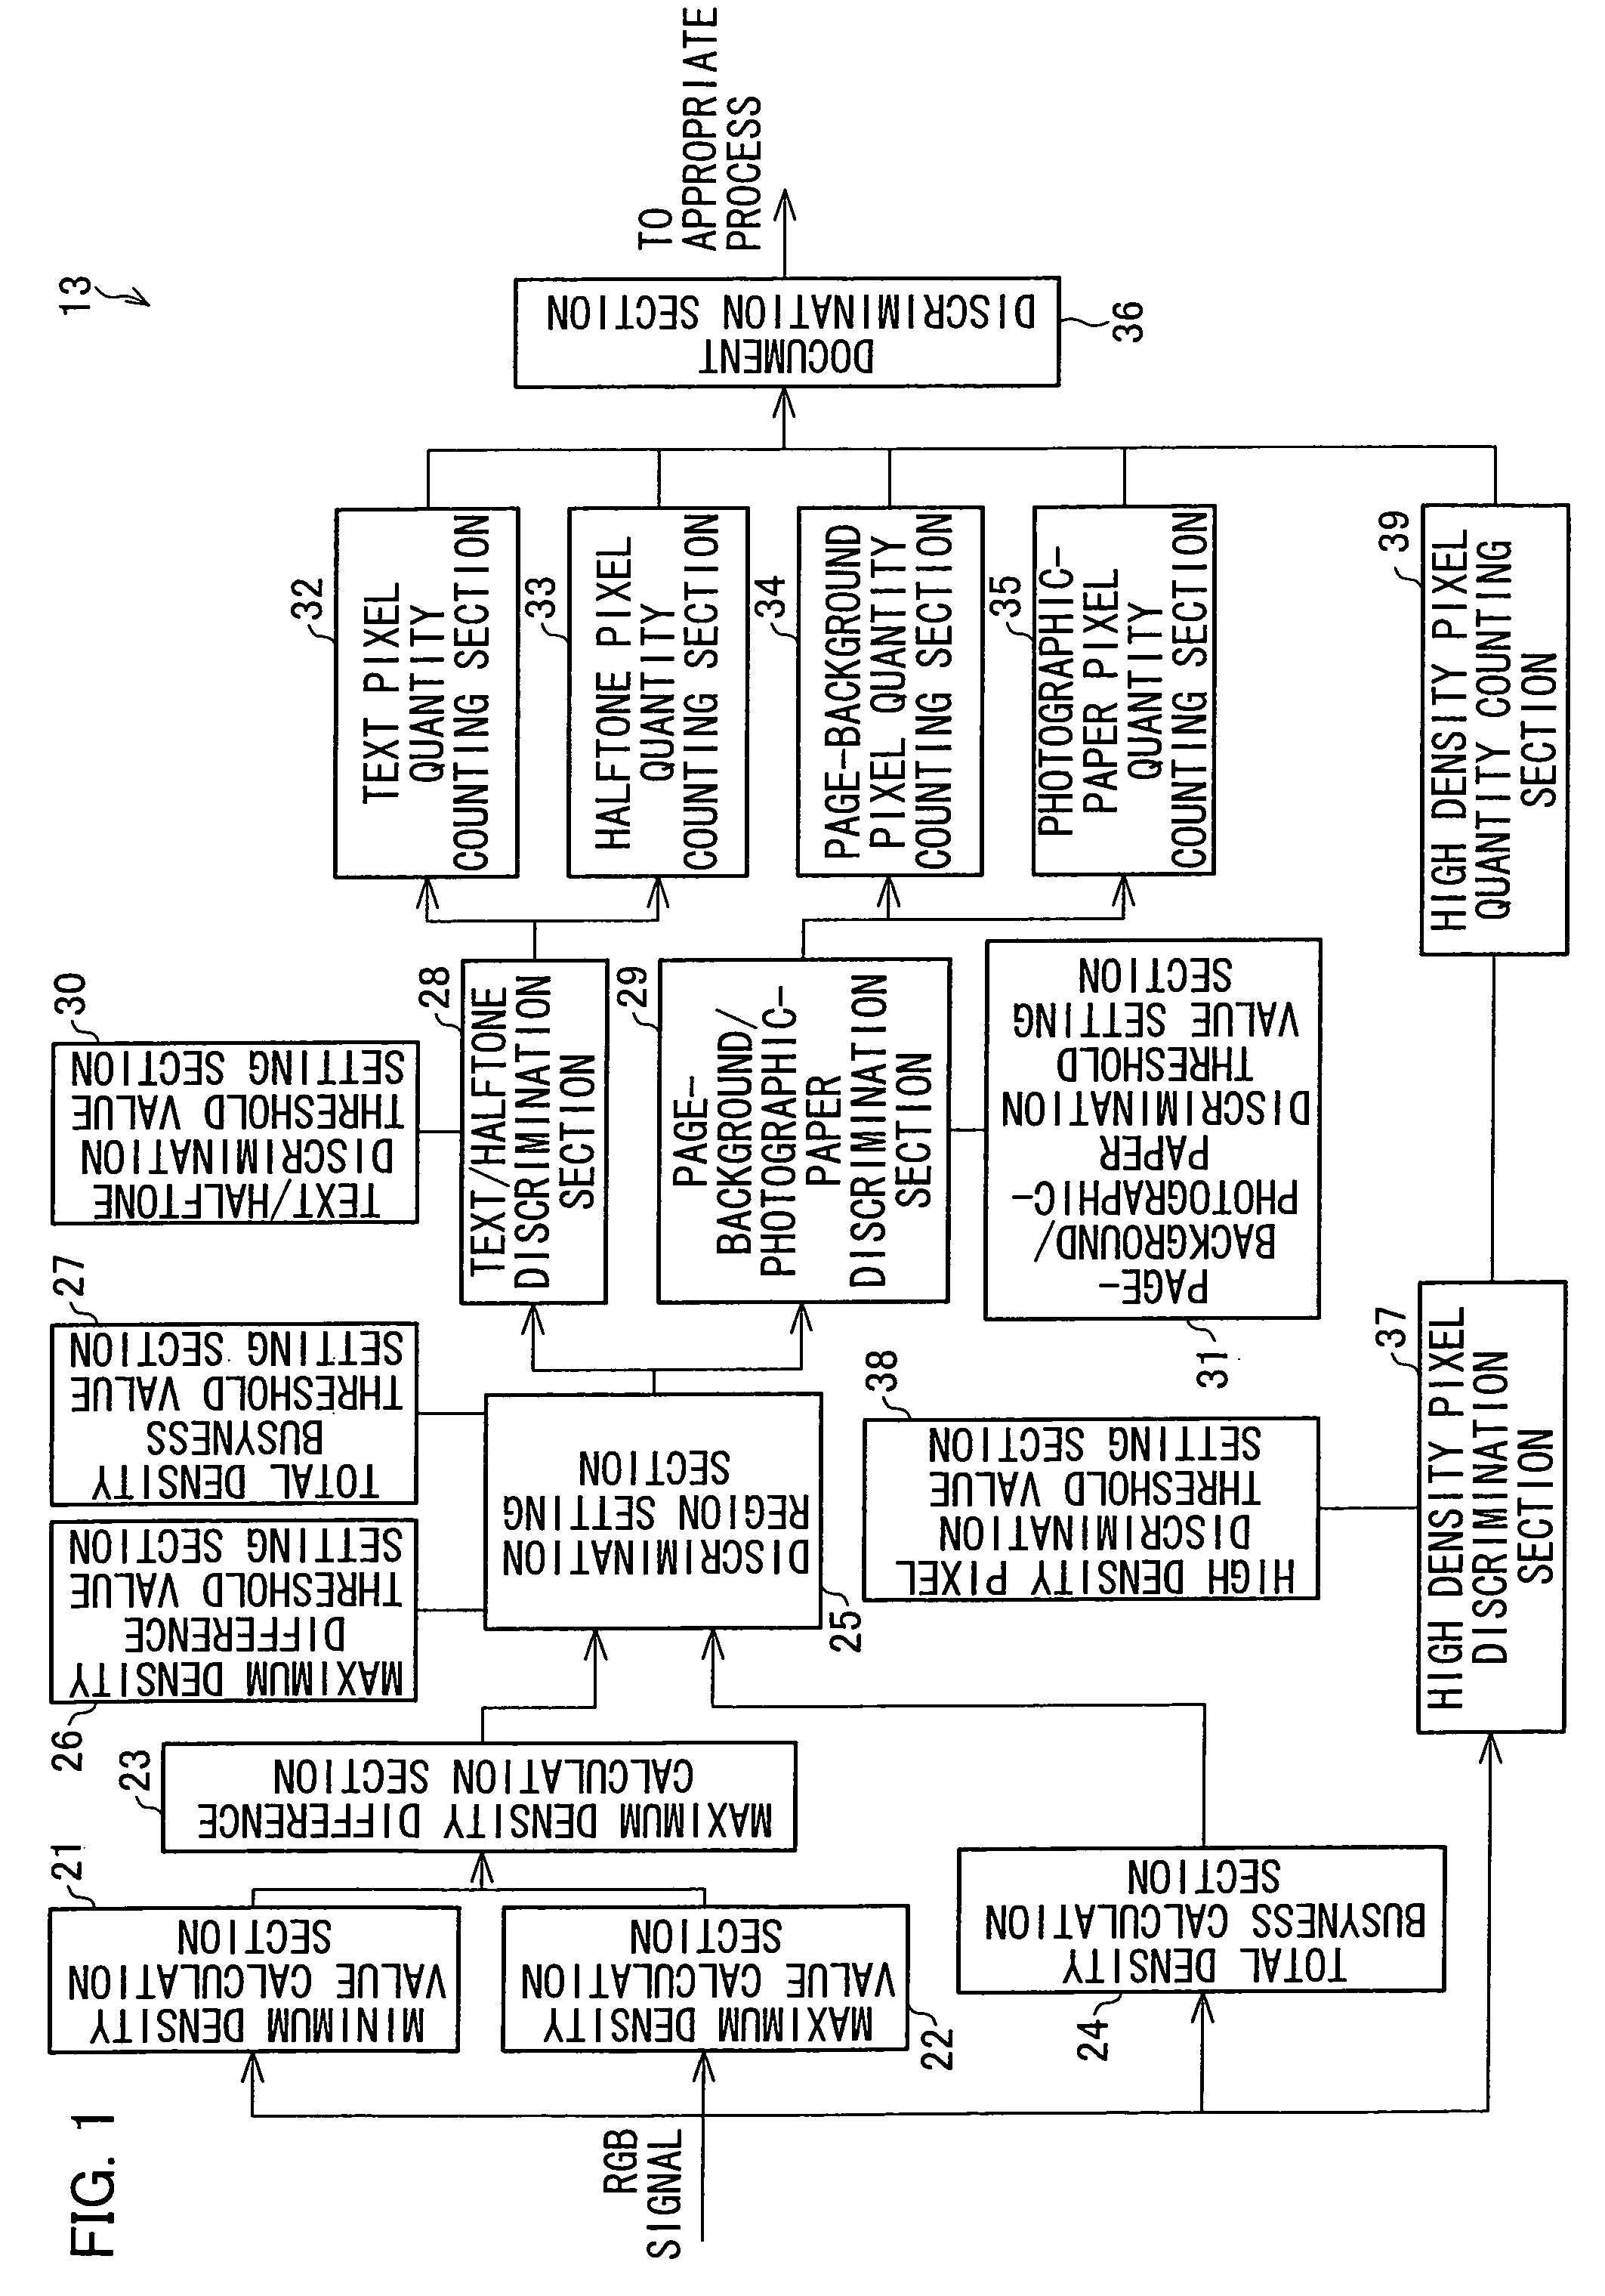 Image processing apparatus, image forming apparatus, method for processing image, computer program, and recording medium